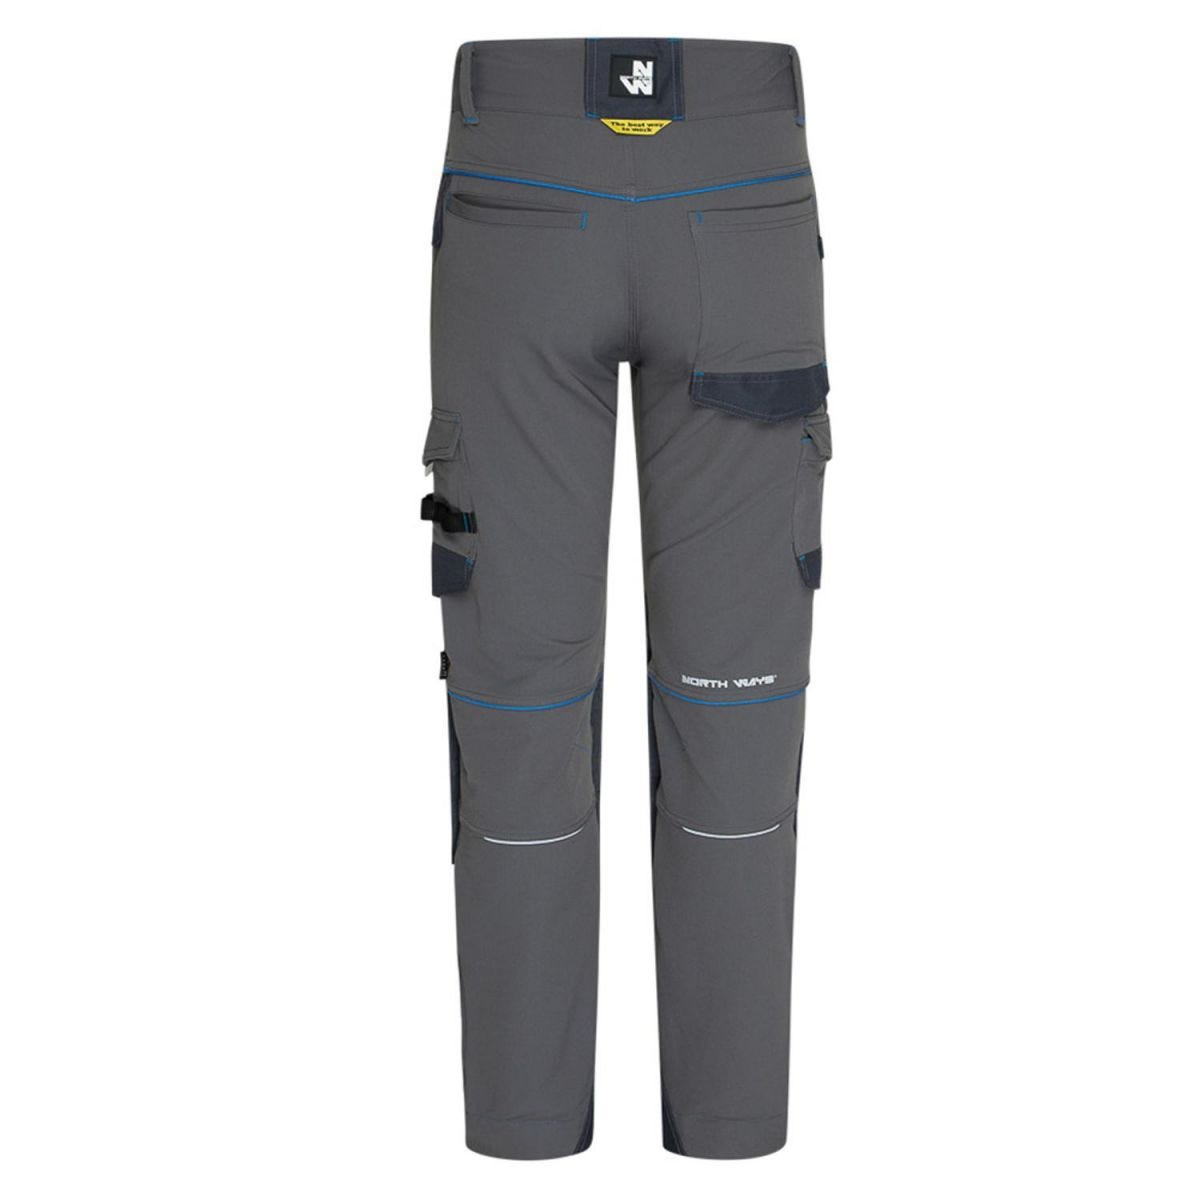 Pantalon de travail SACHA gris/bleu - North Ways - Taille 52 2